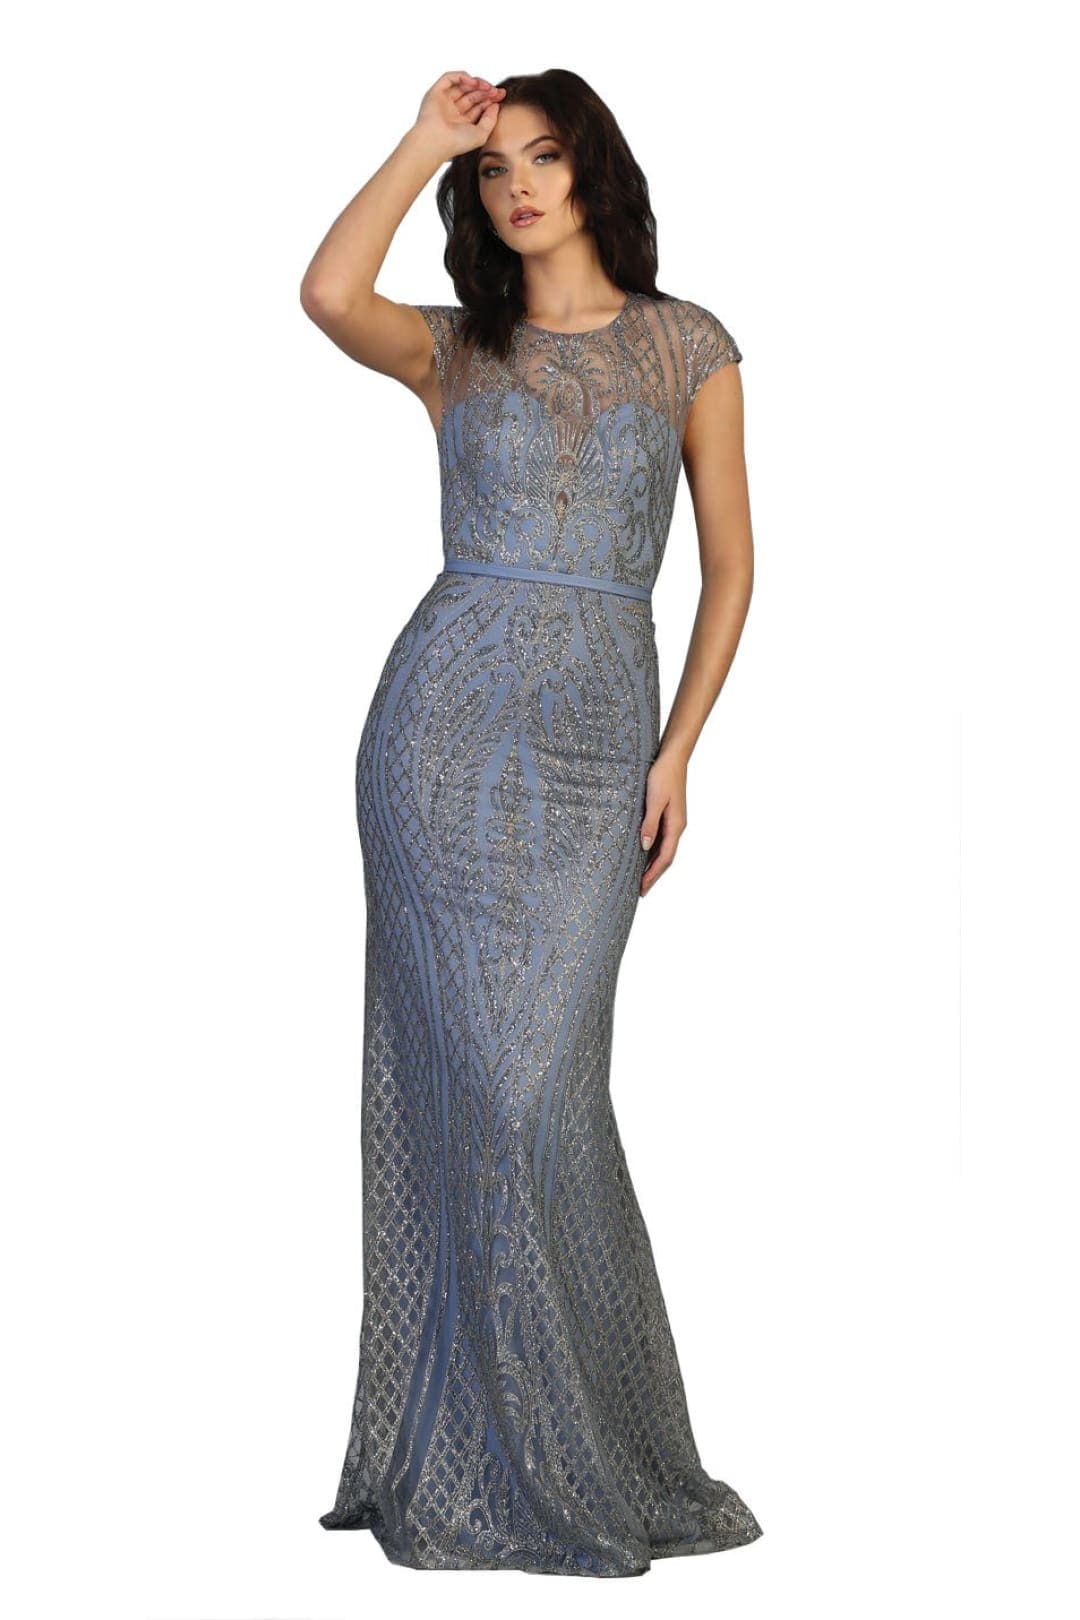 May Queen Cap Sleeve Glitter Plus Size Dress MQ1722